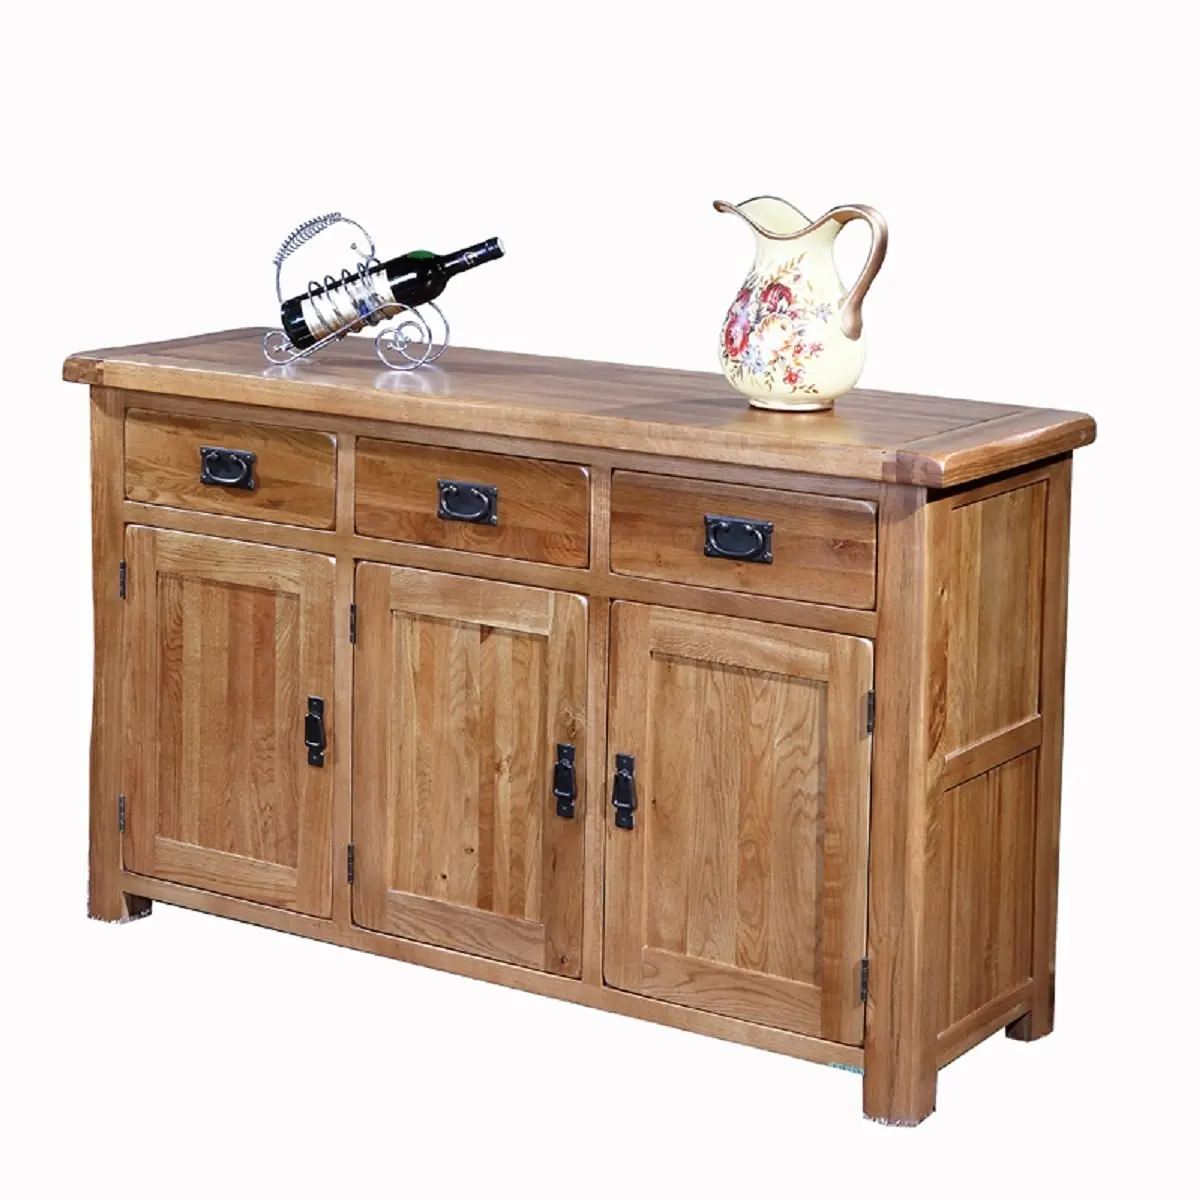 Buy Chinese Huayi Soild Oak Wood Dishes Display Cabinets Locker